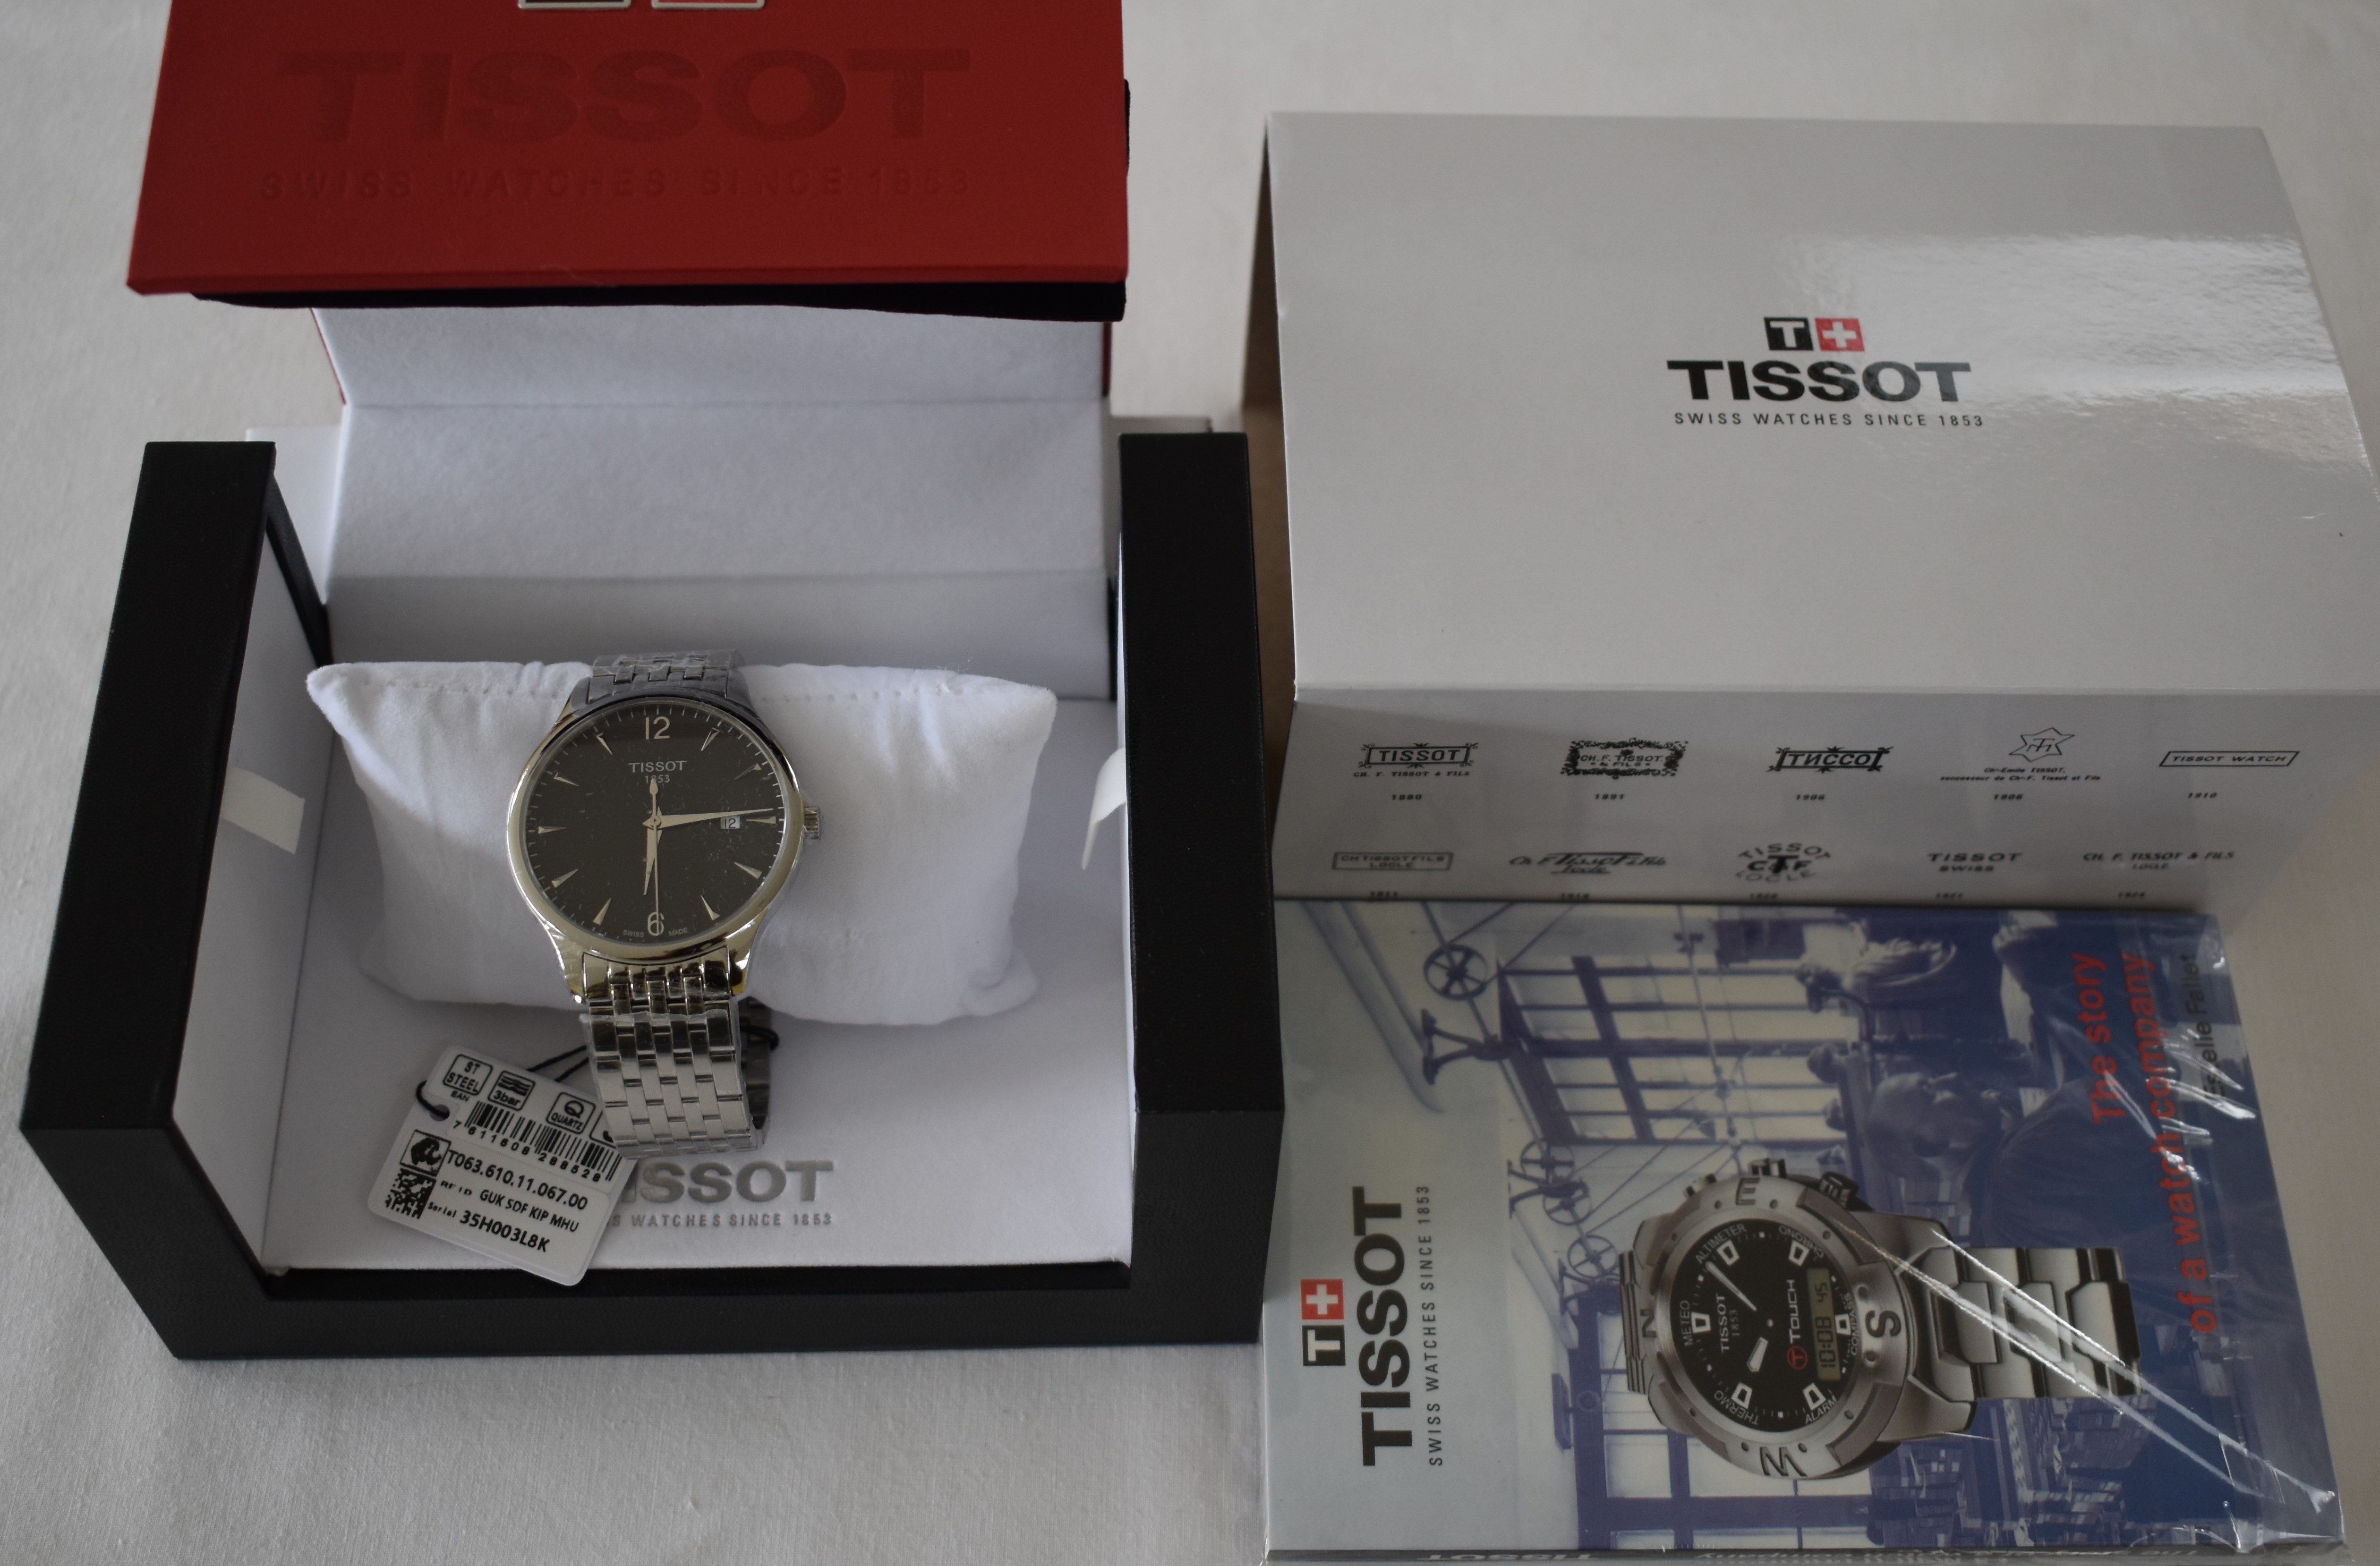 Tissot Men's Watch TO63.610.11.067.00 - Image 2 of 2